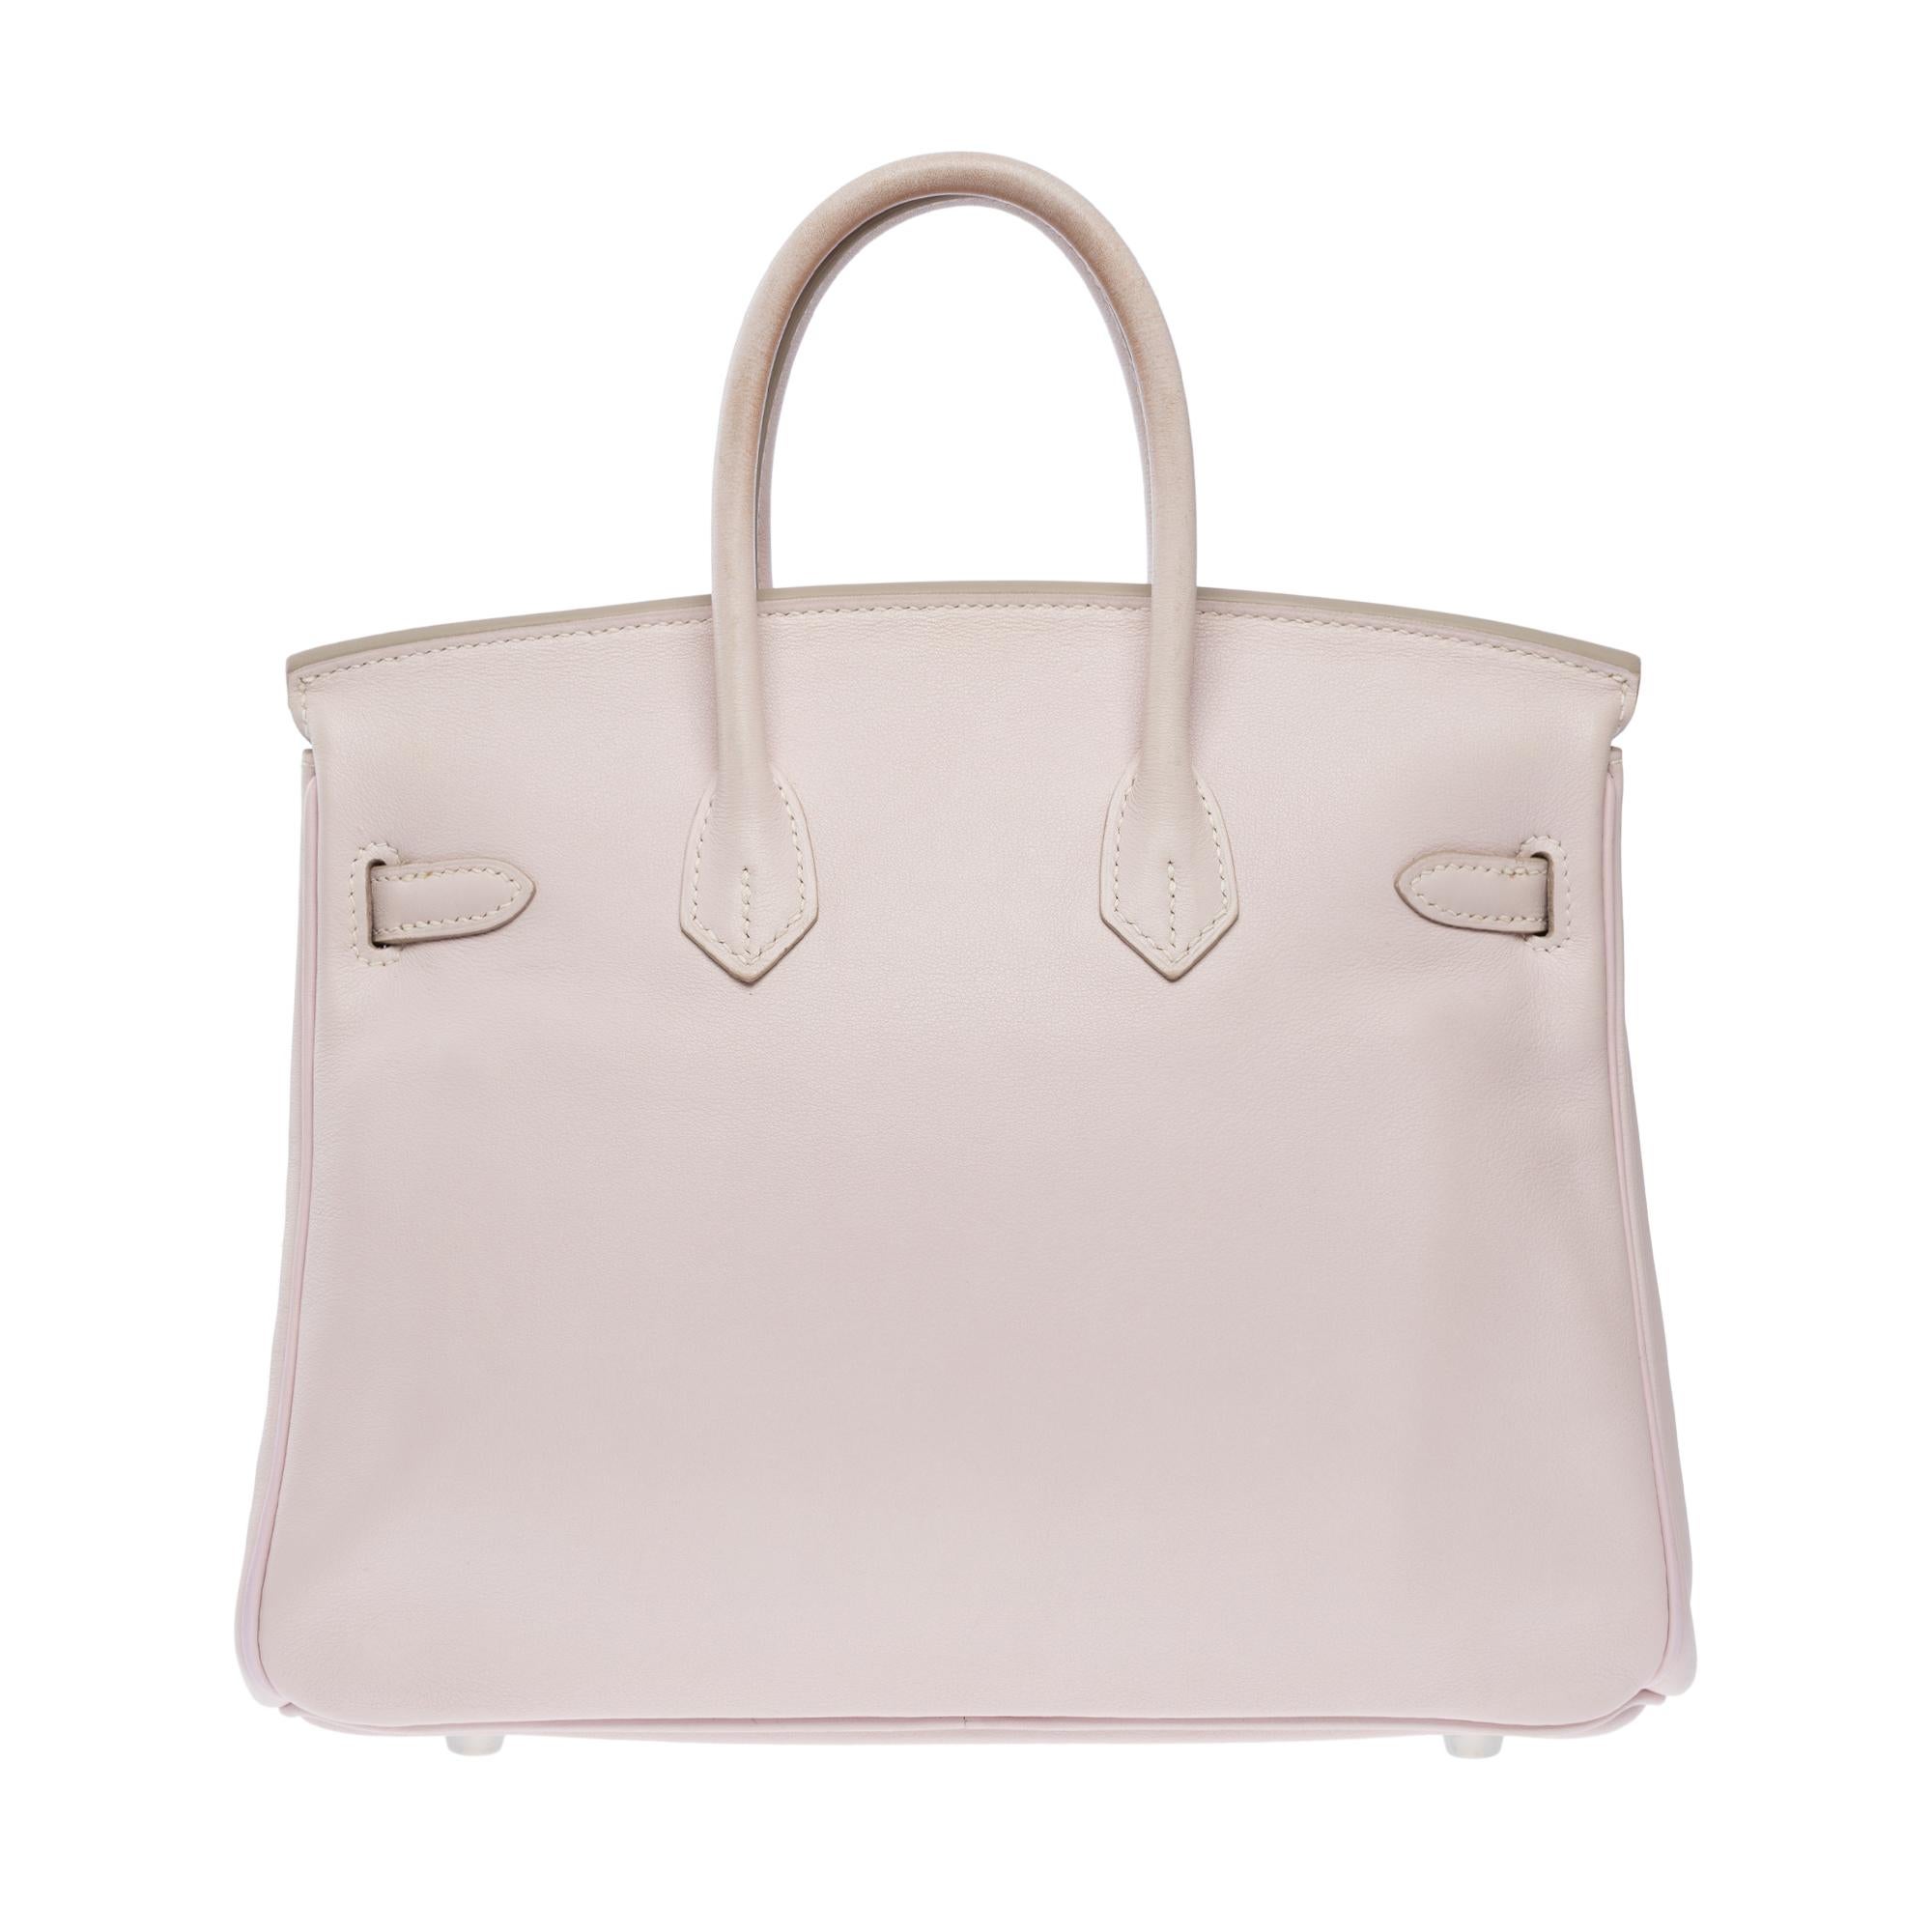 Women's Amazing Hermes Birkin 25cm handbag in Rose Dragee Swift Calf leather, SHW For Sale